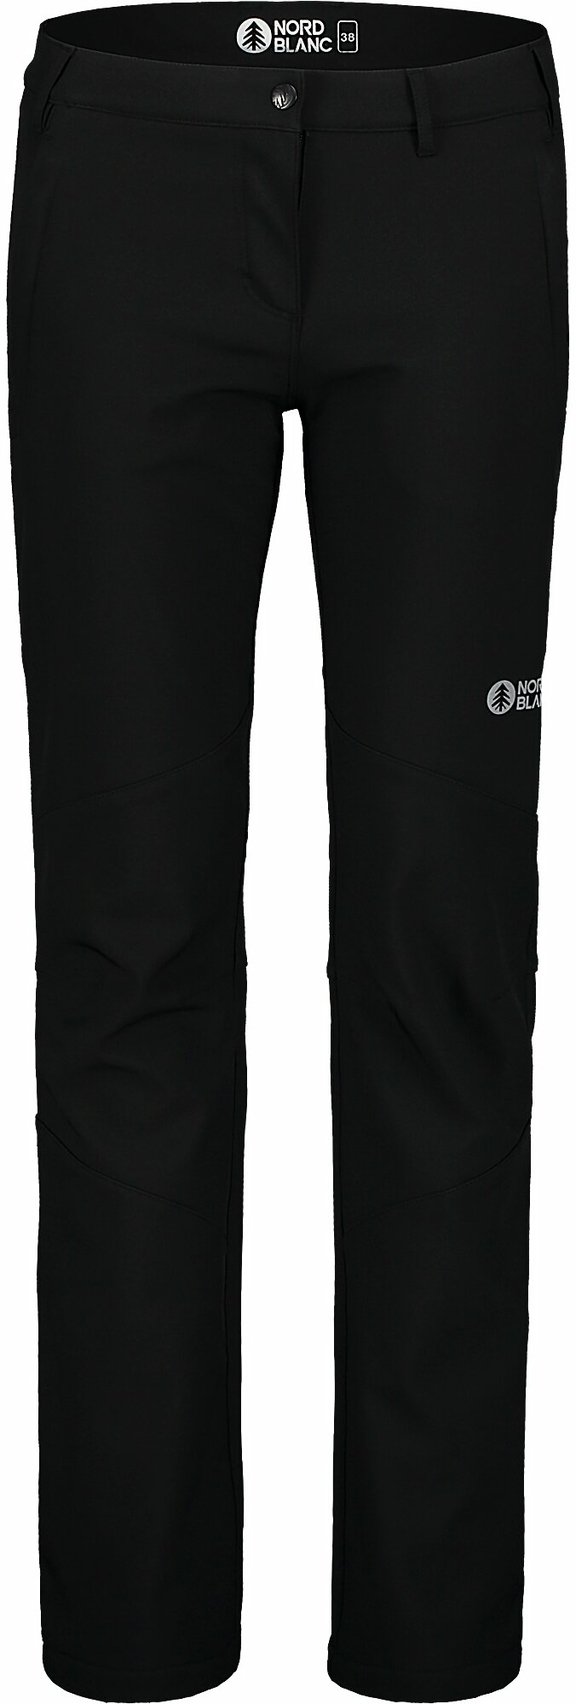 Dámské softshellové kalhoty NORDBLANC - Suss - NBFPL7370